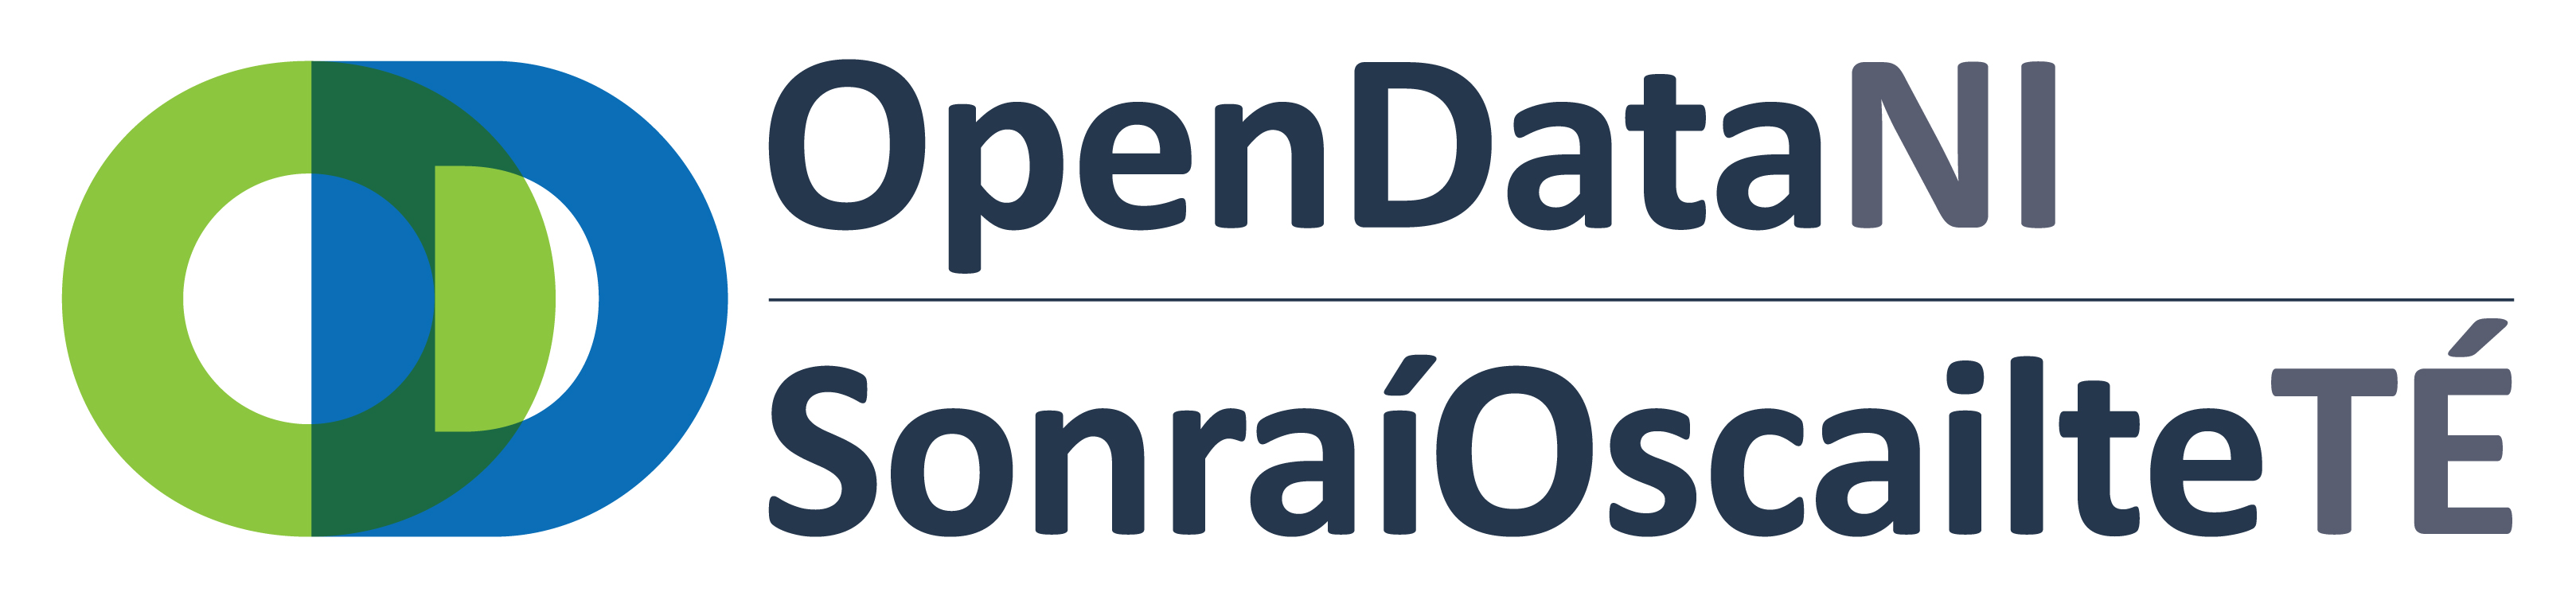 open-data-publisher-demo